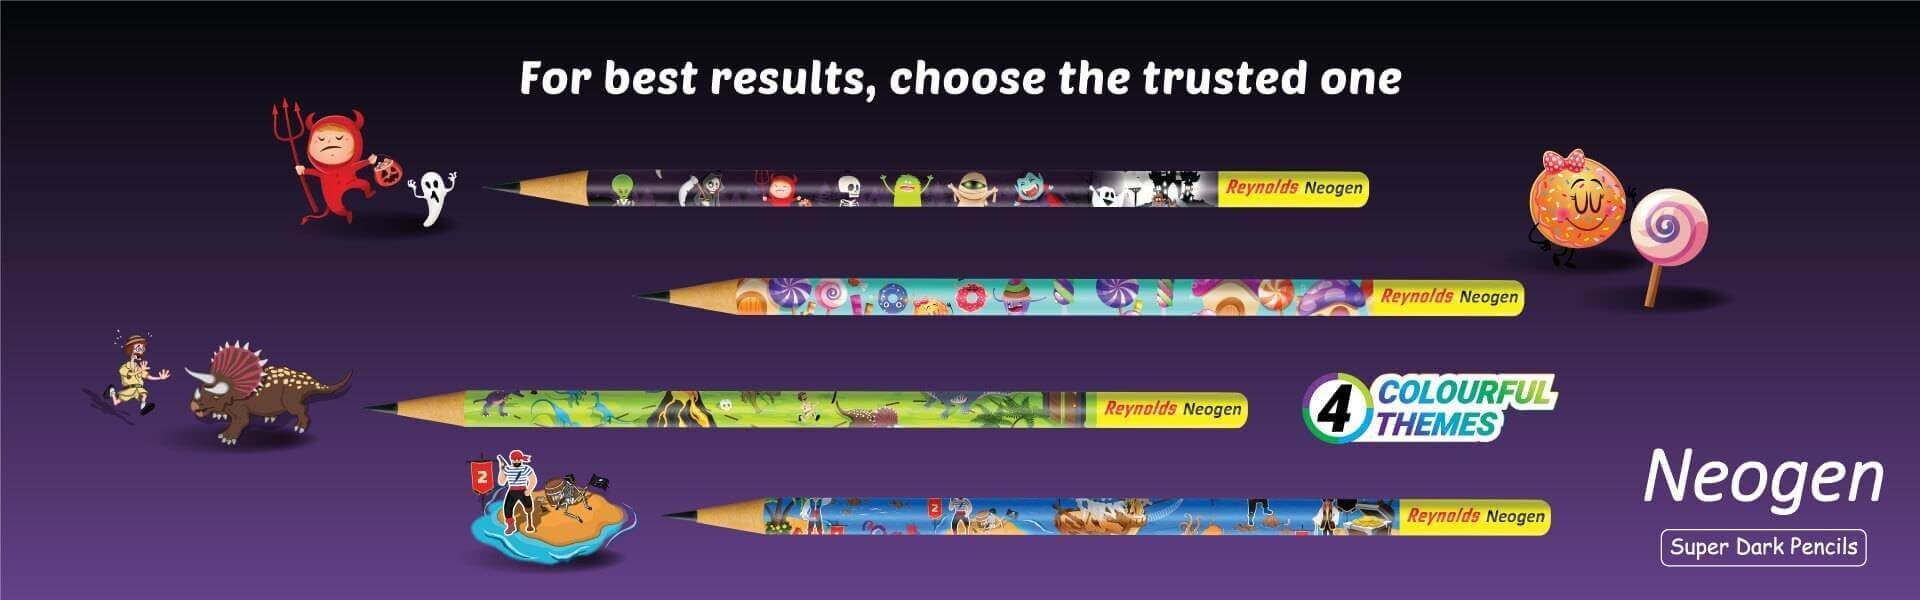 Reynolds - Product Listing Banner - Neogen Super Dark Pencil - 3